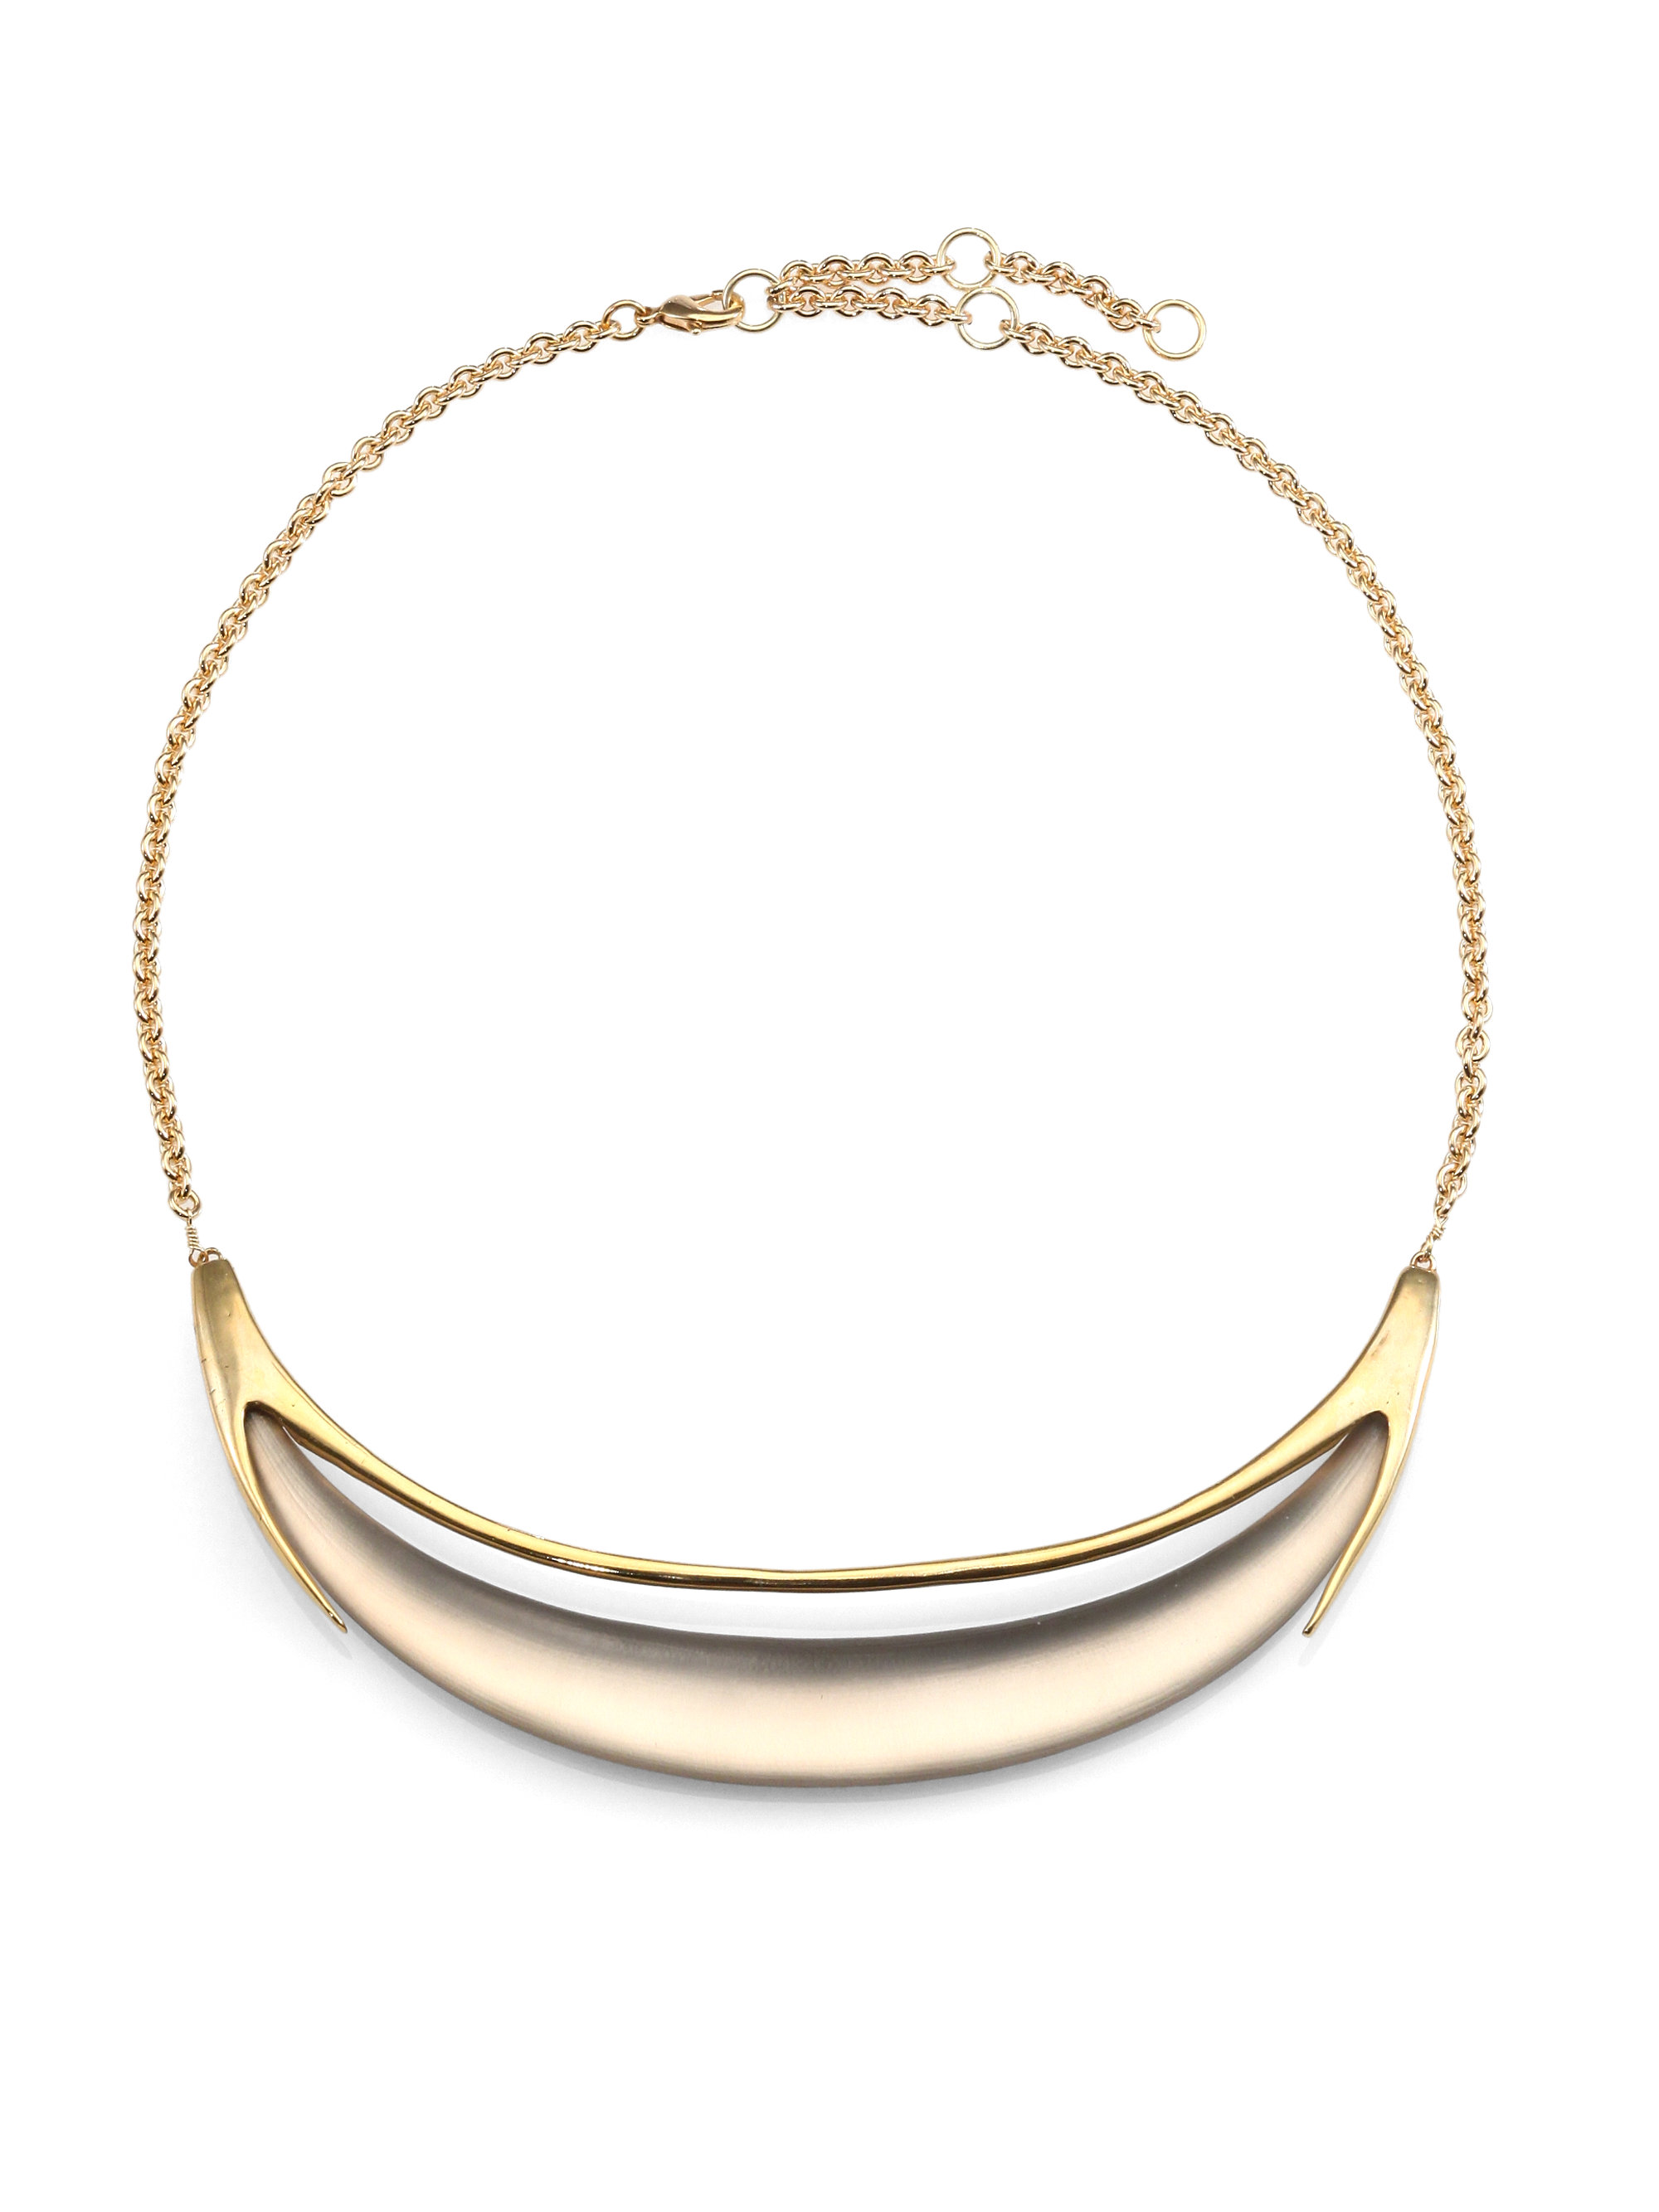 Lyst - Alexis Bittar Lucite Crescent Necklace in Metallic